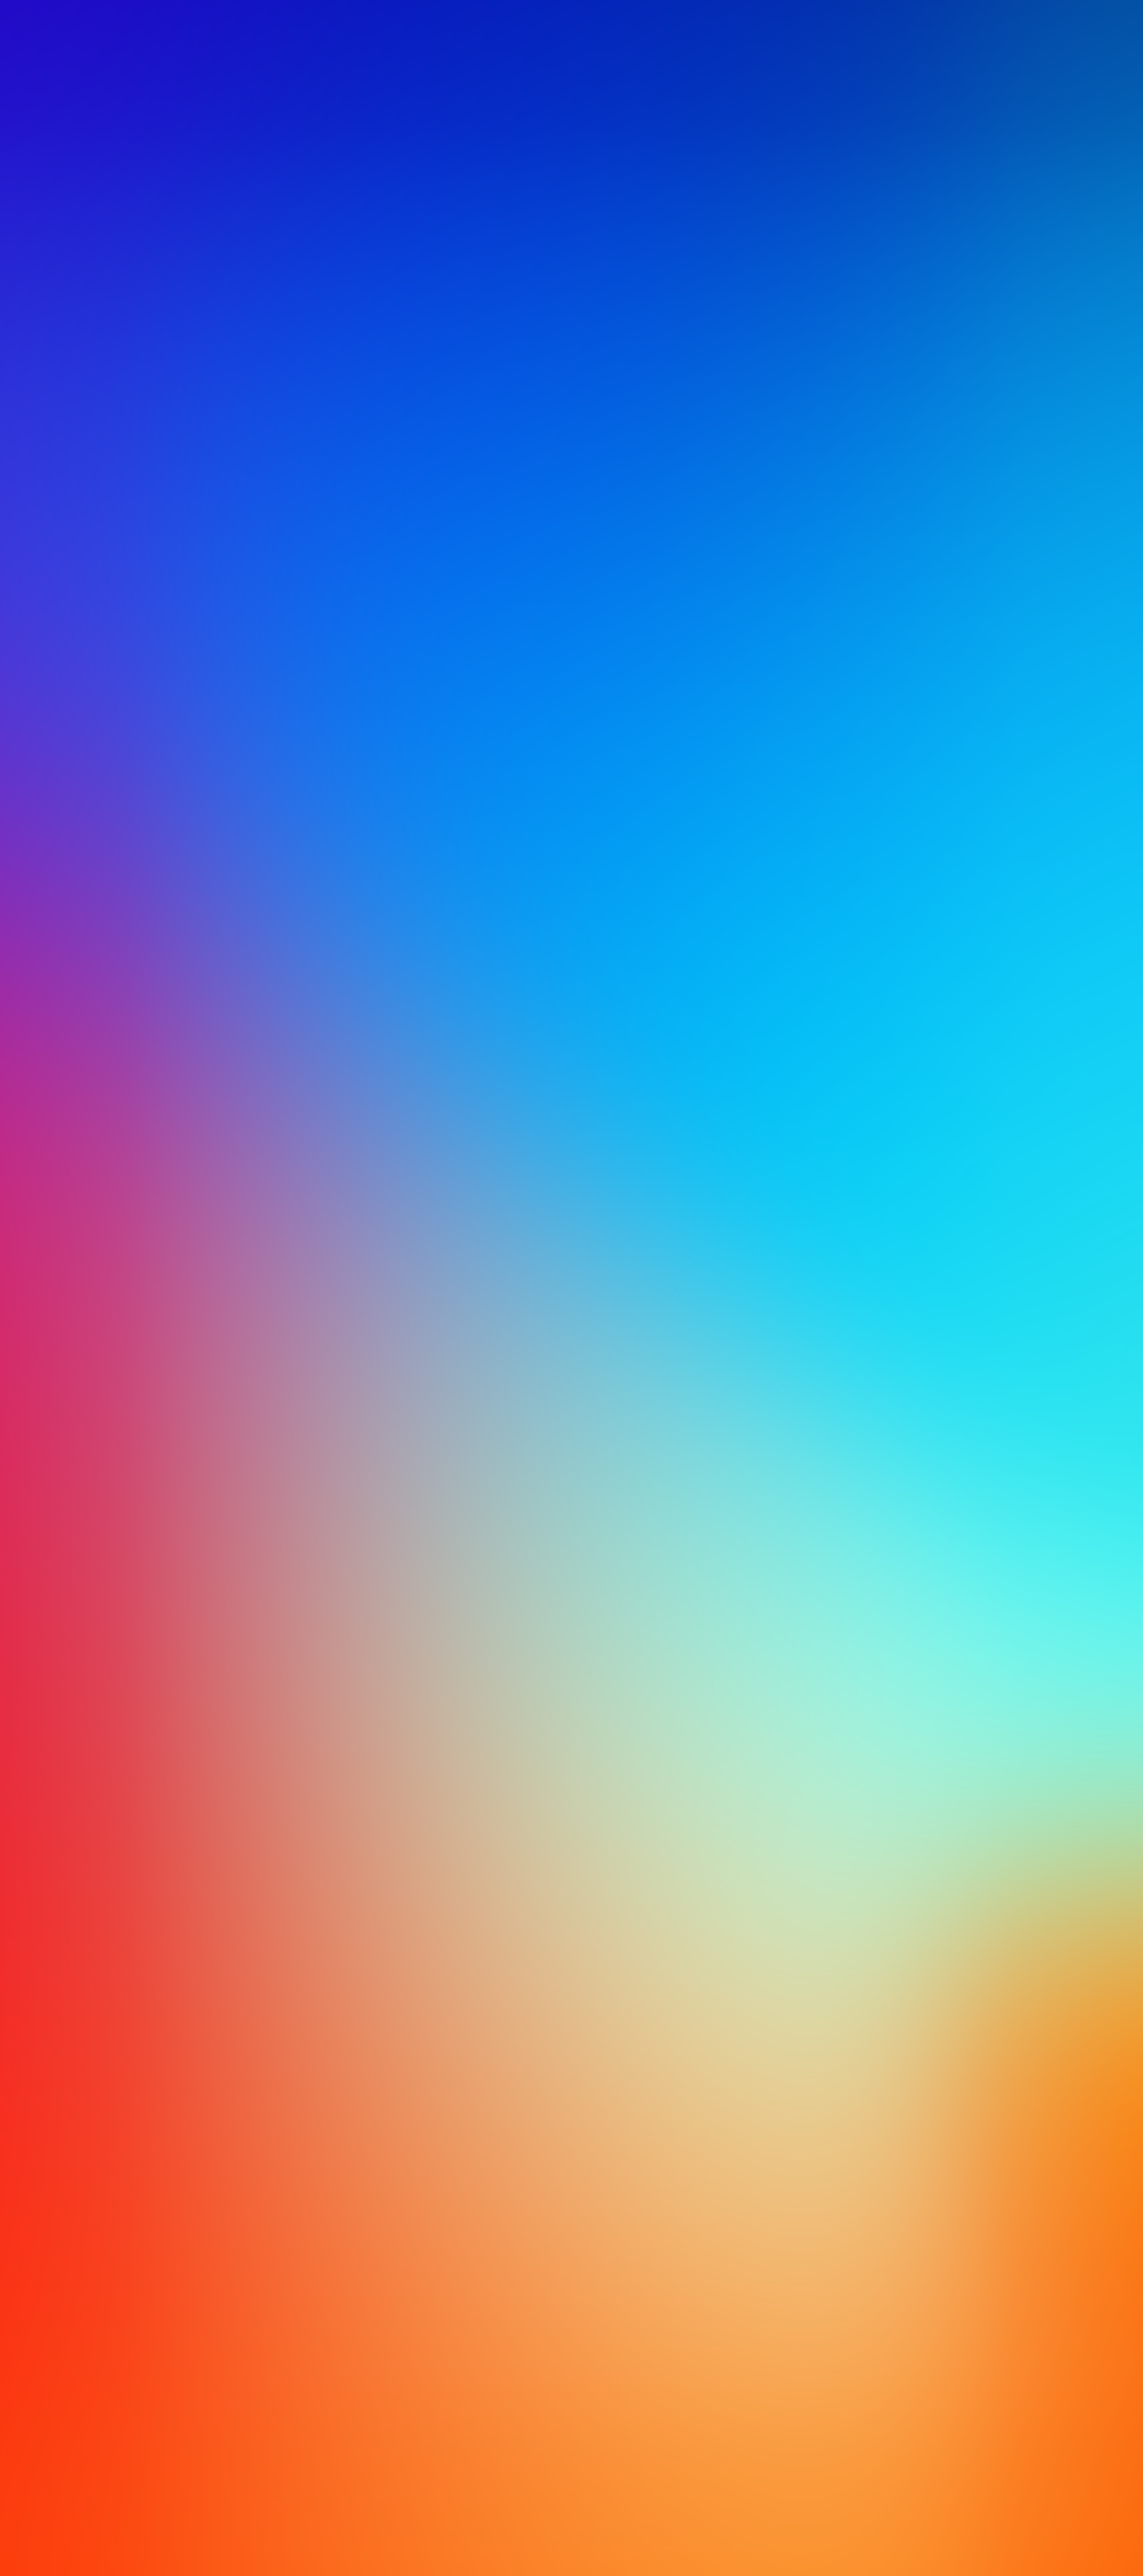 gradient v38 by @EvgeniyZemelko on Twitter | Zollotech